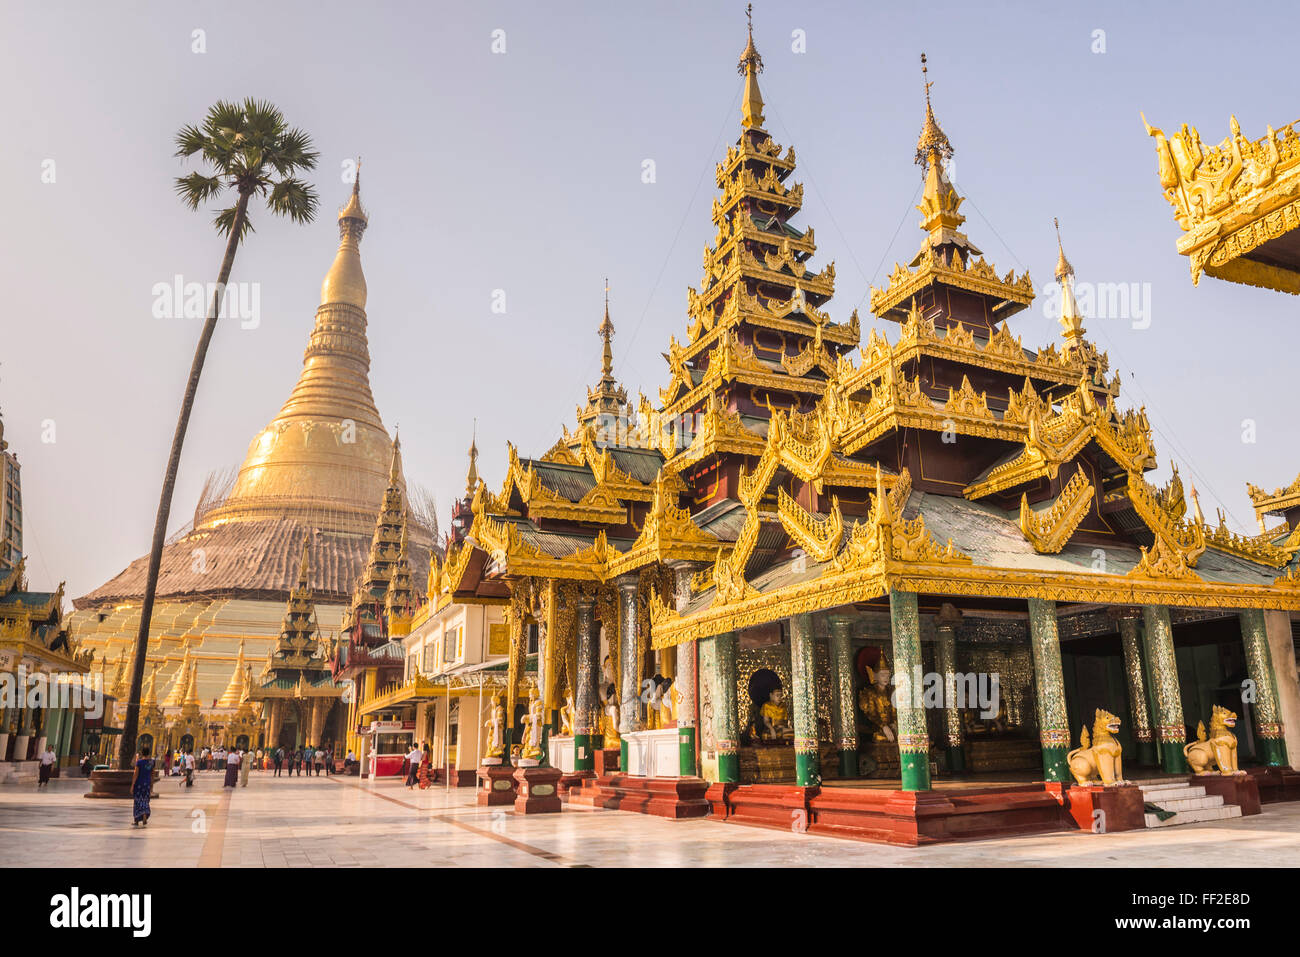 Shwedagon Pagoda (Shwedagon Zedi Daw) (GoRMden Pagoda), Yangon (Rangoon), Myanmar (Burma), Asia Stock Photo